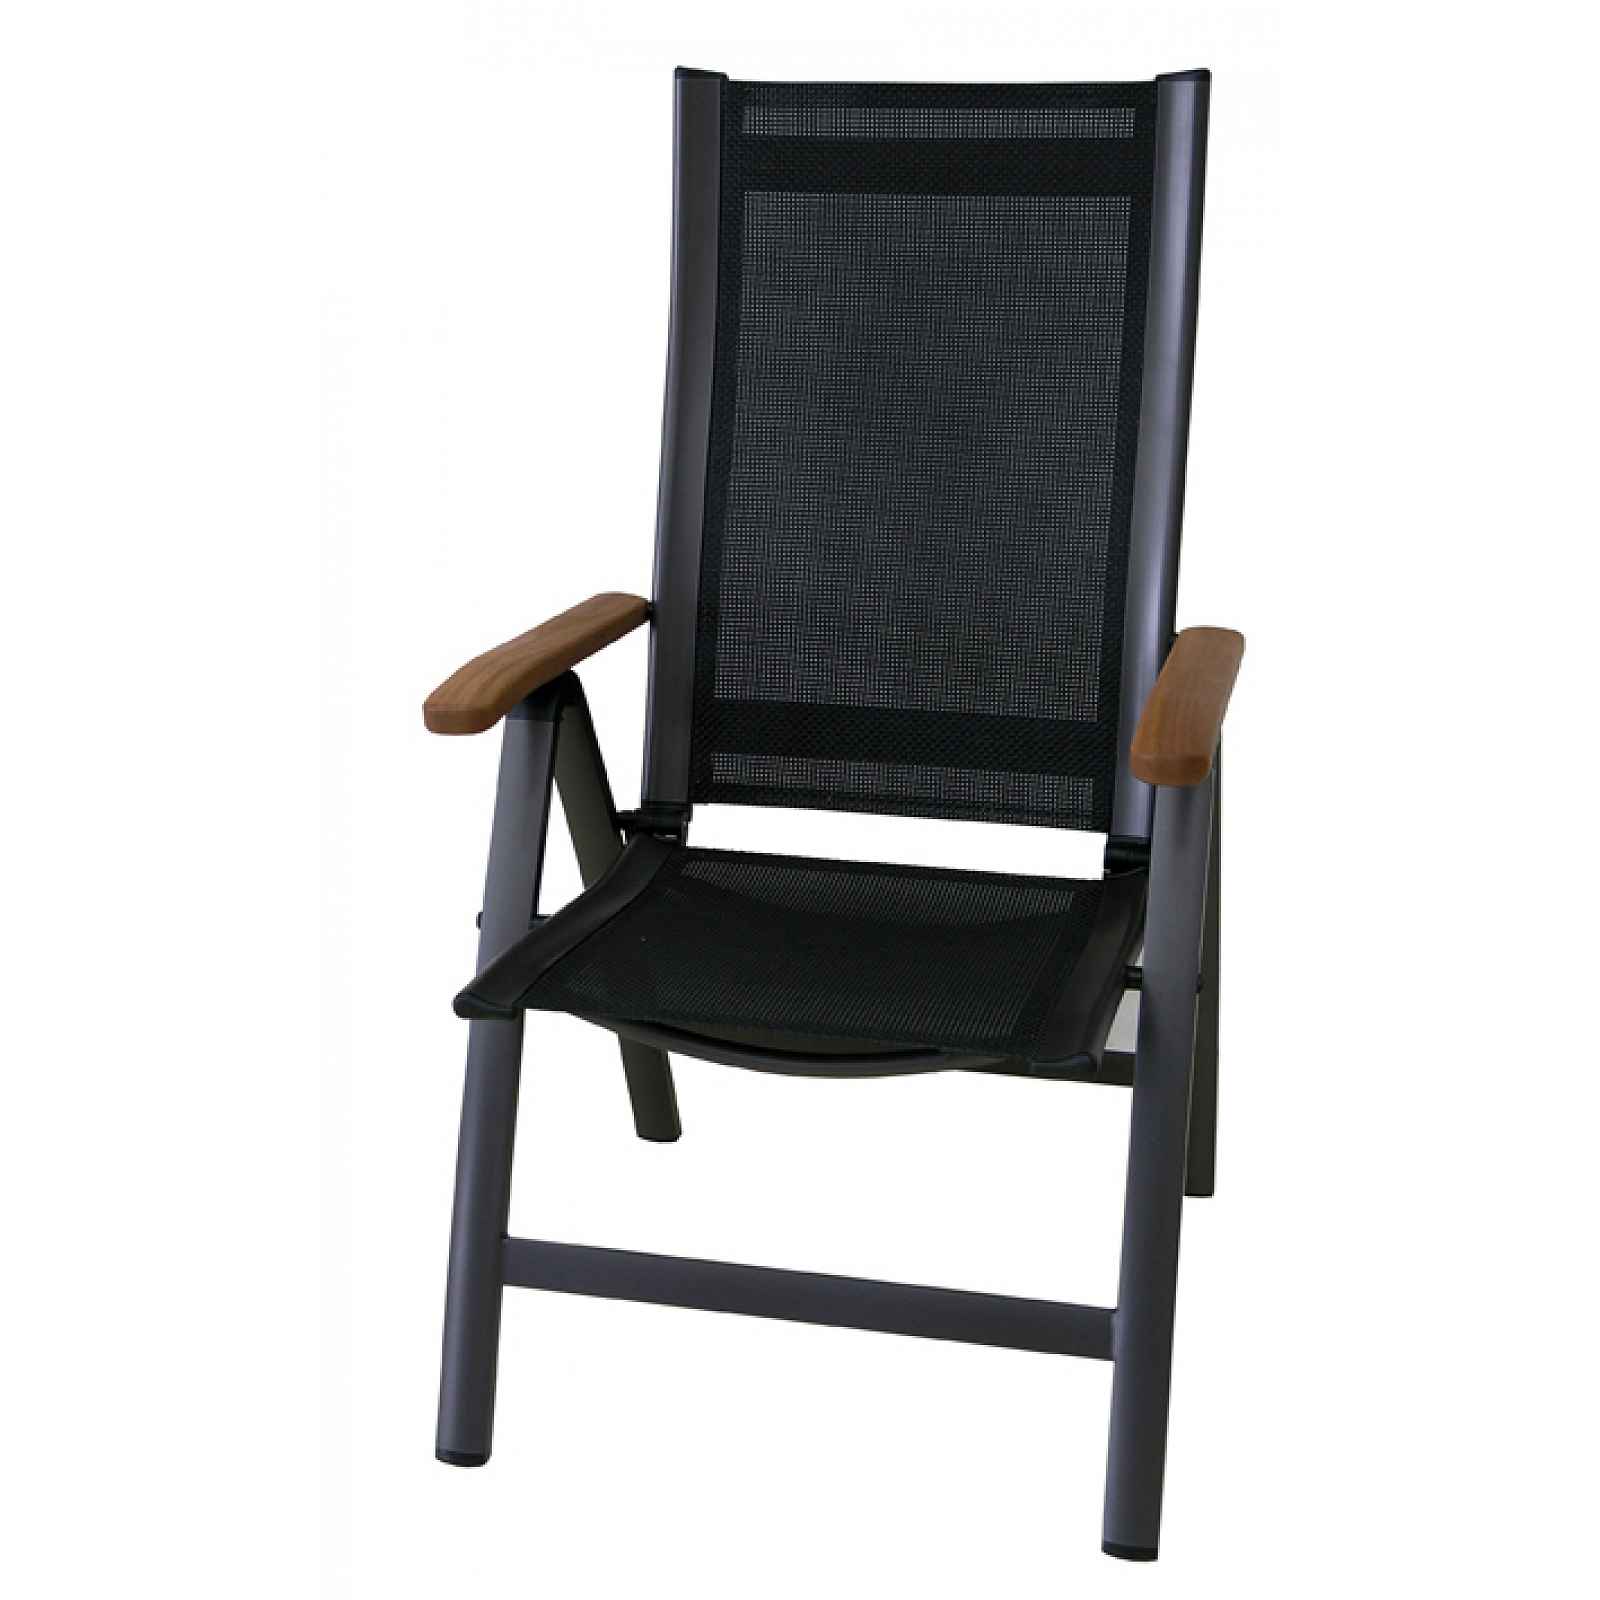 ASS COMFORT poloh. židle - antracit + černá Sun garden